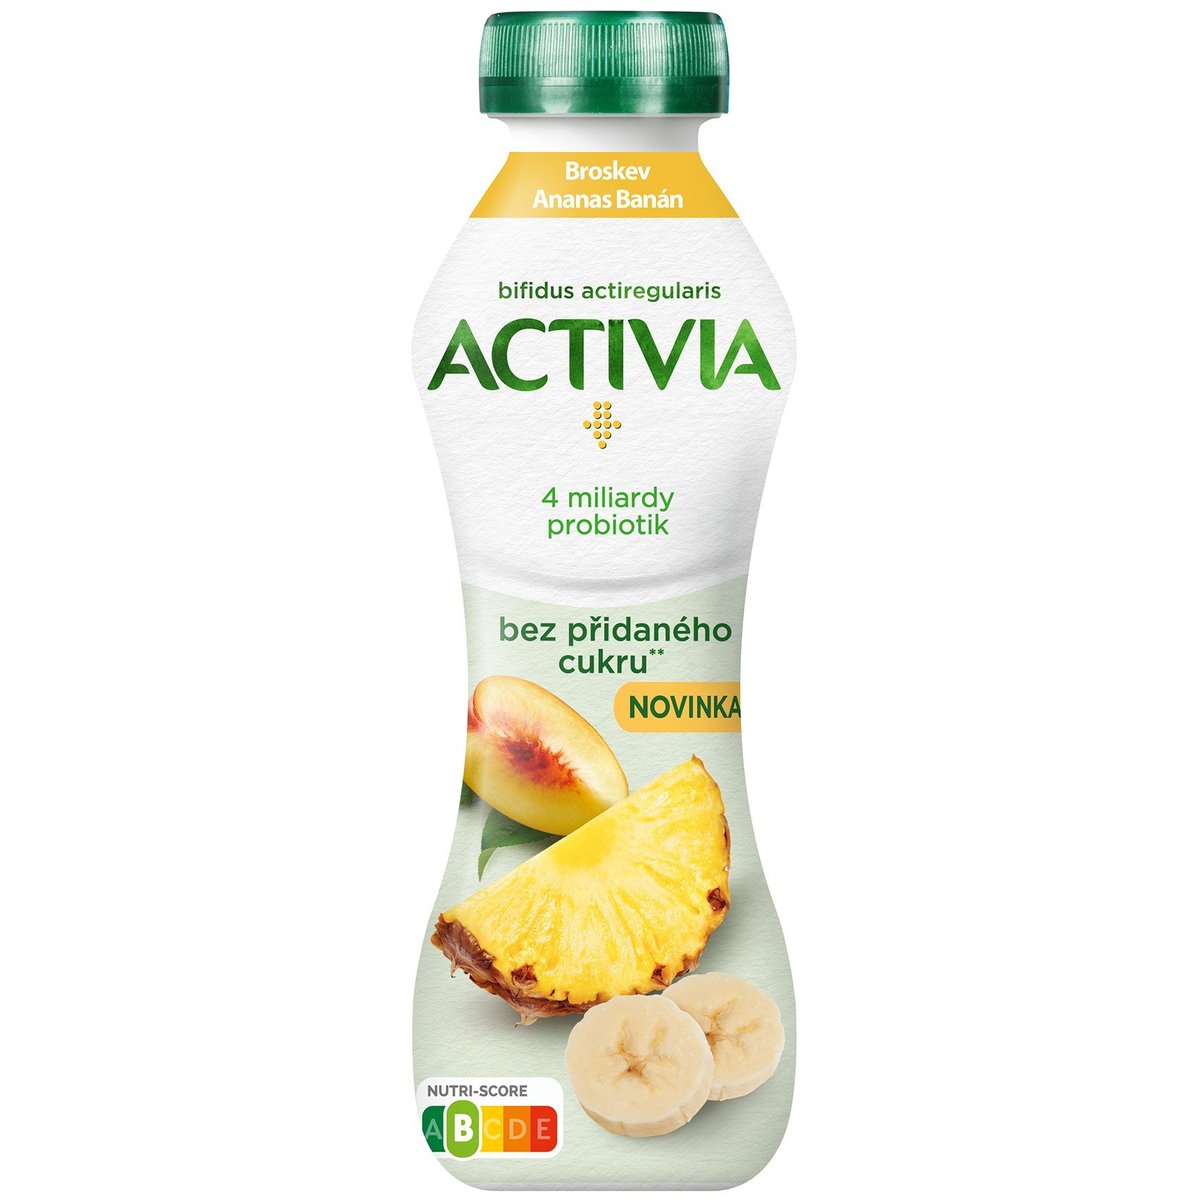 Activia Probiotický jogurtový nápoj broskev, ananas a banán bez přidaného cukru v akci